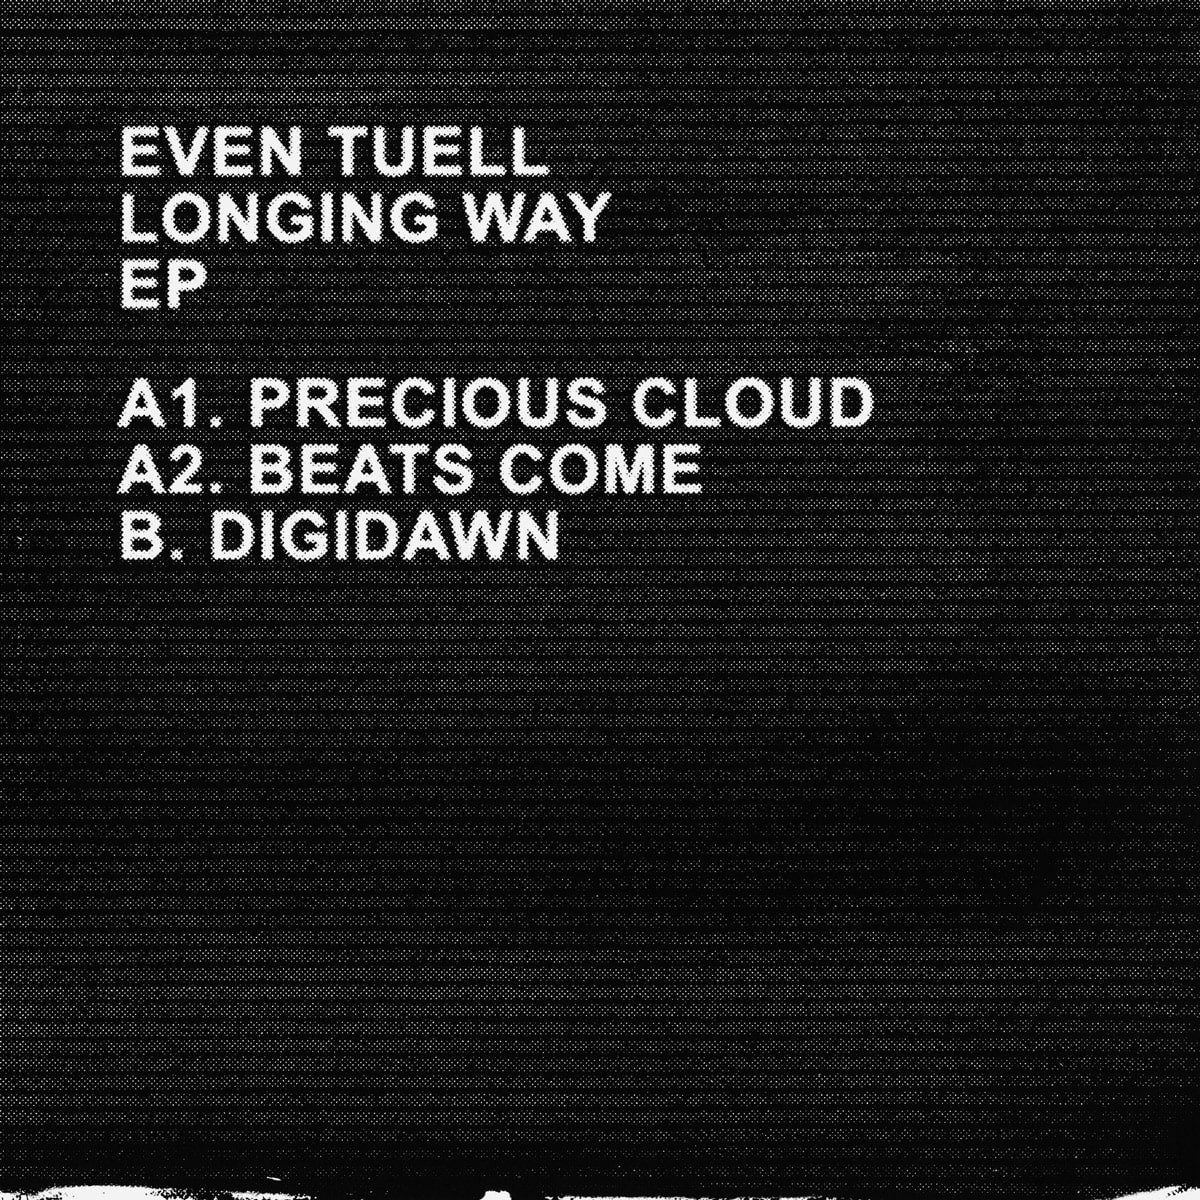 EVEN TUELL - Longing Way [LTNC003] © Latency